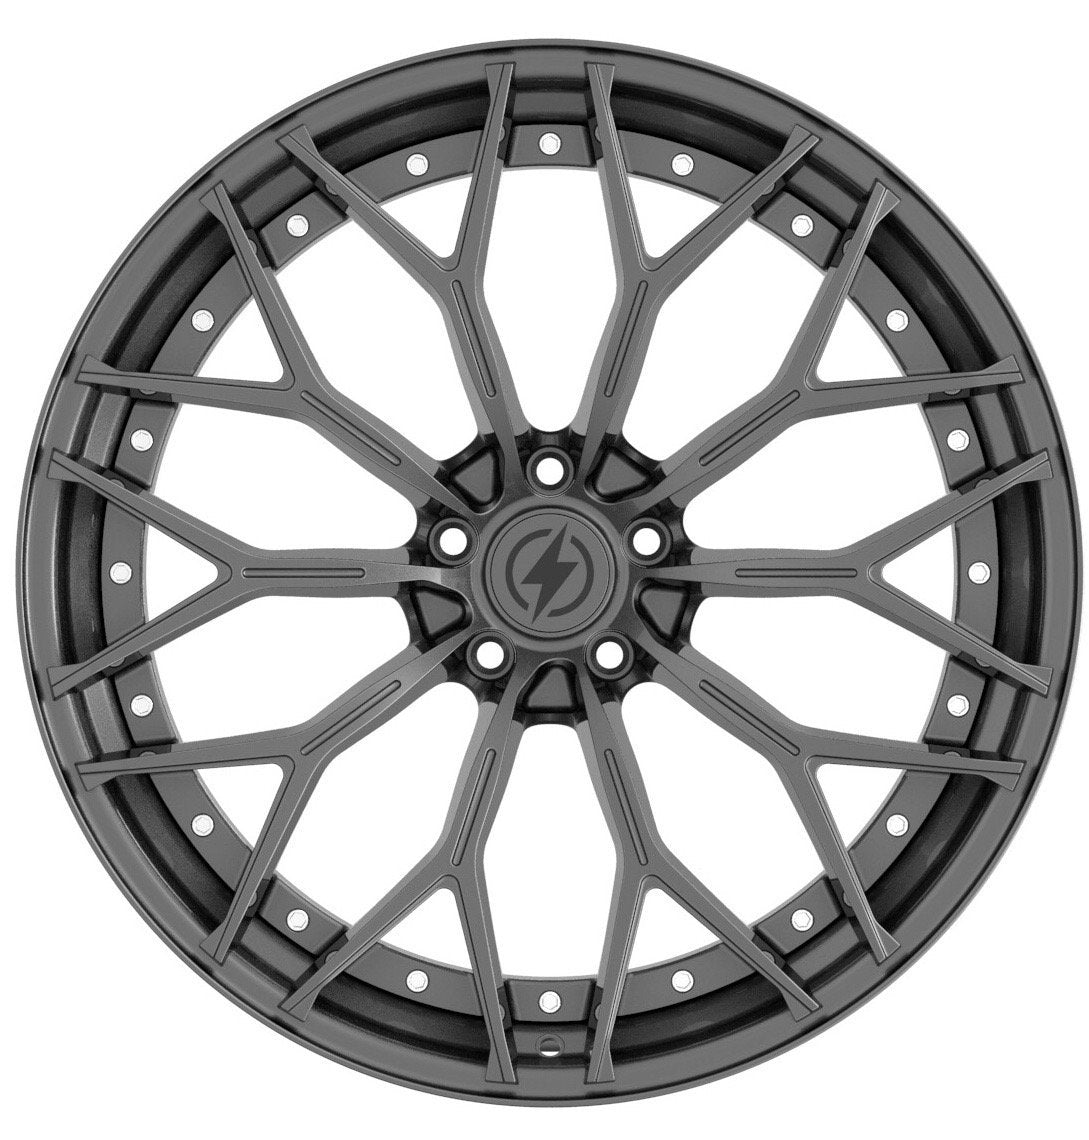 EF2P-4 Forged Wheel For Tesla